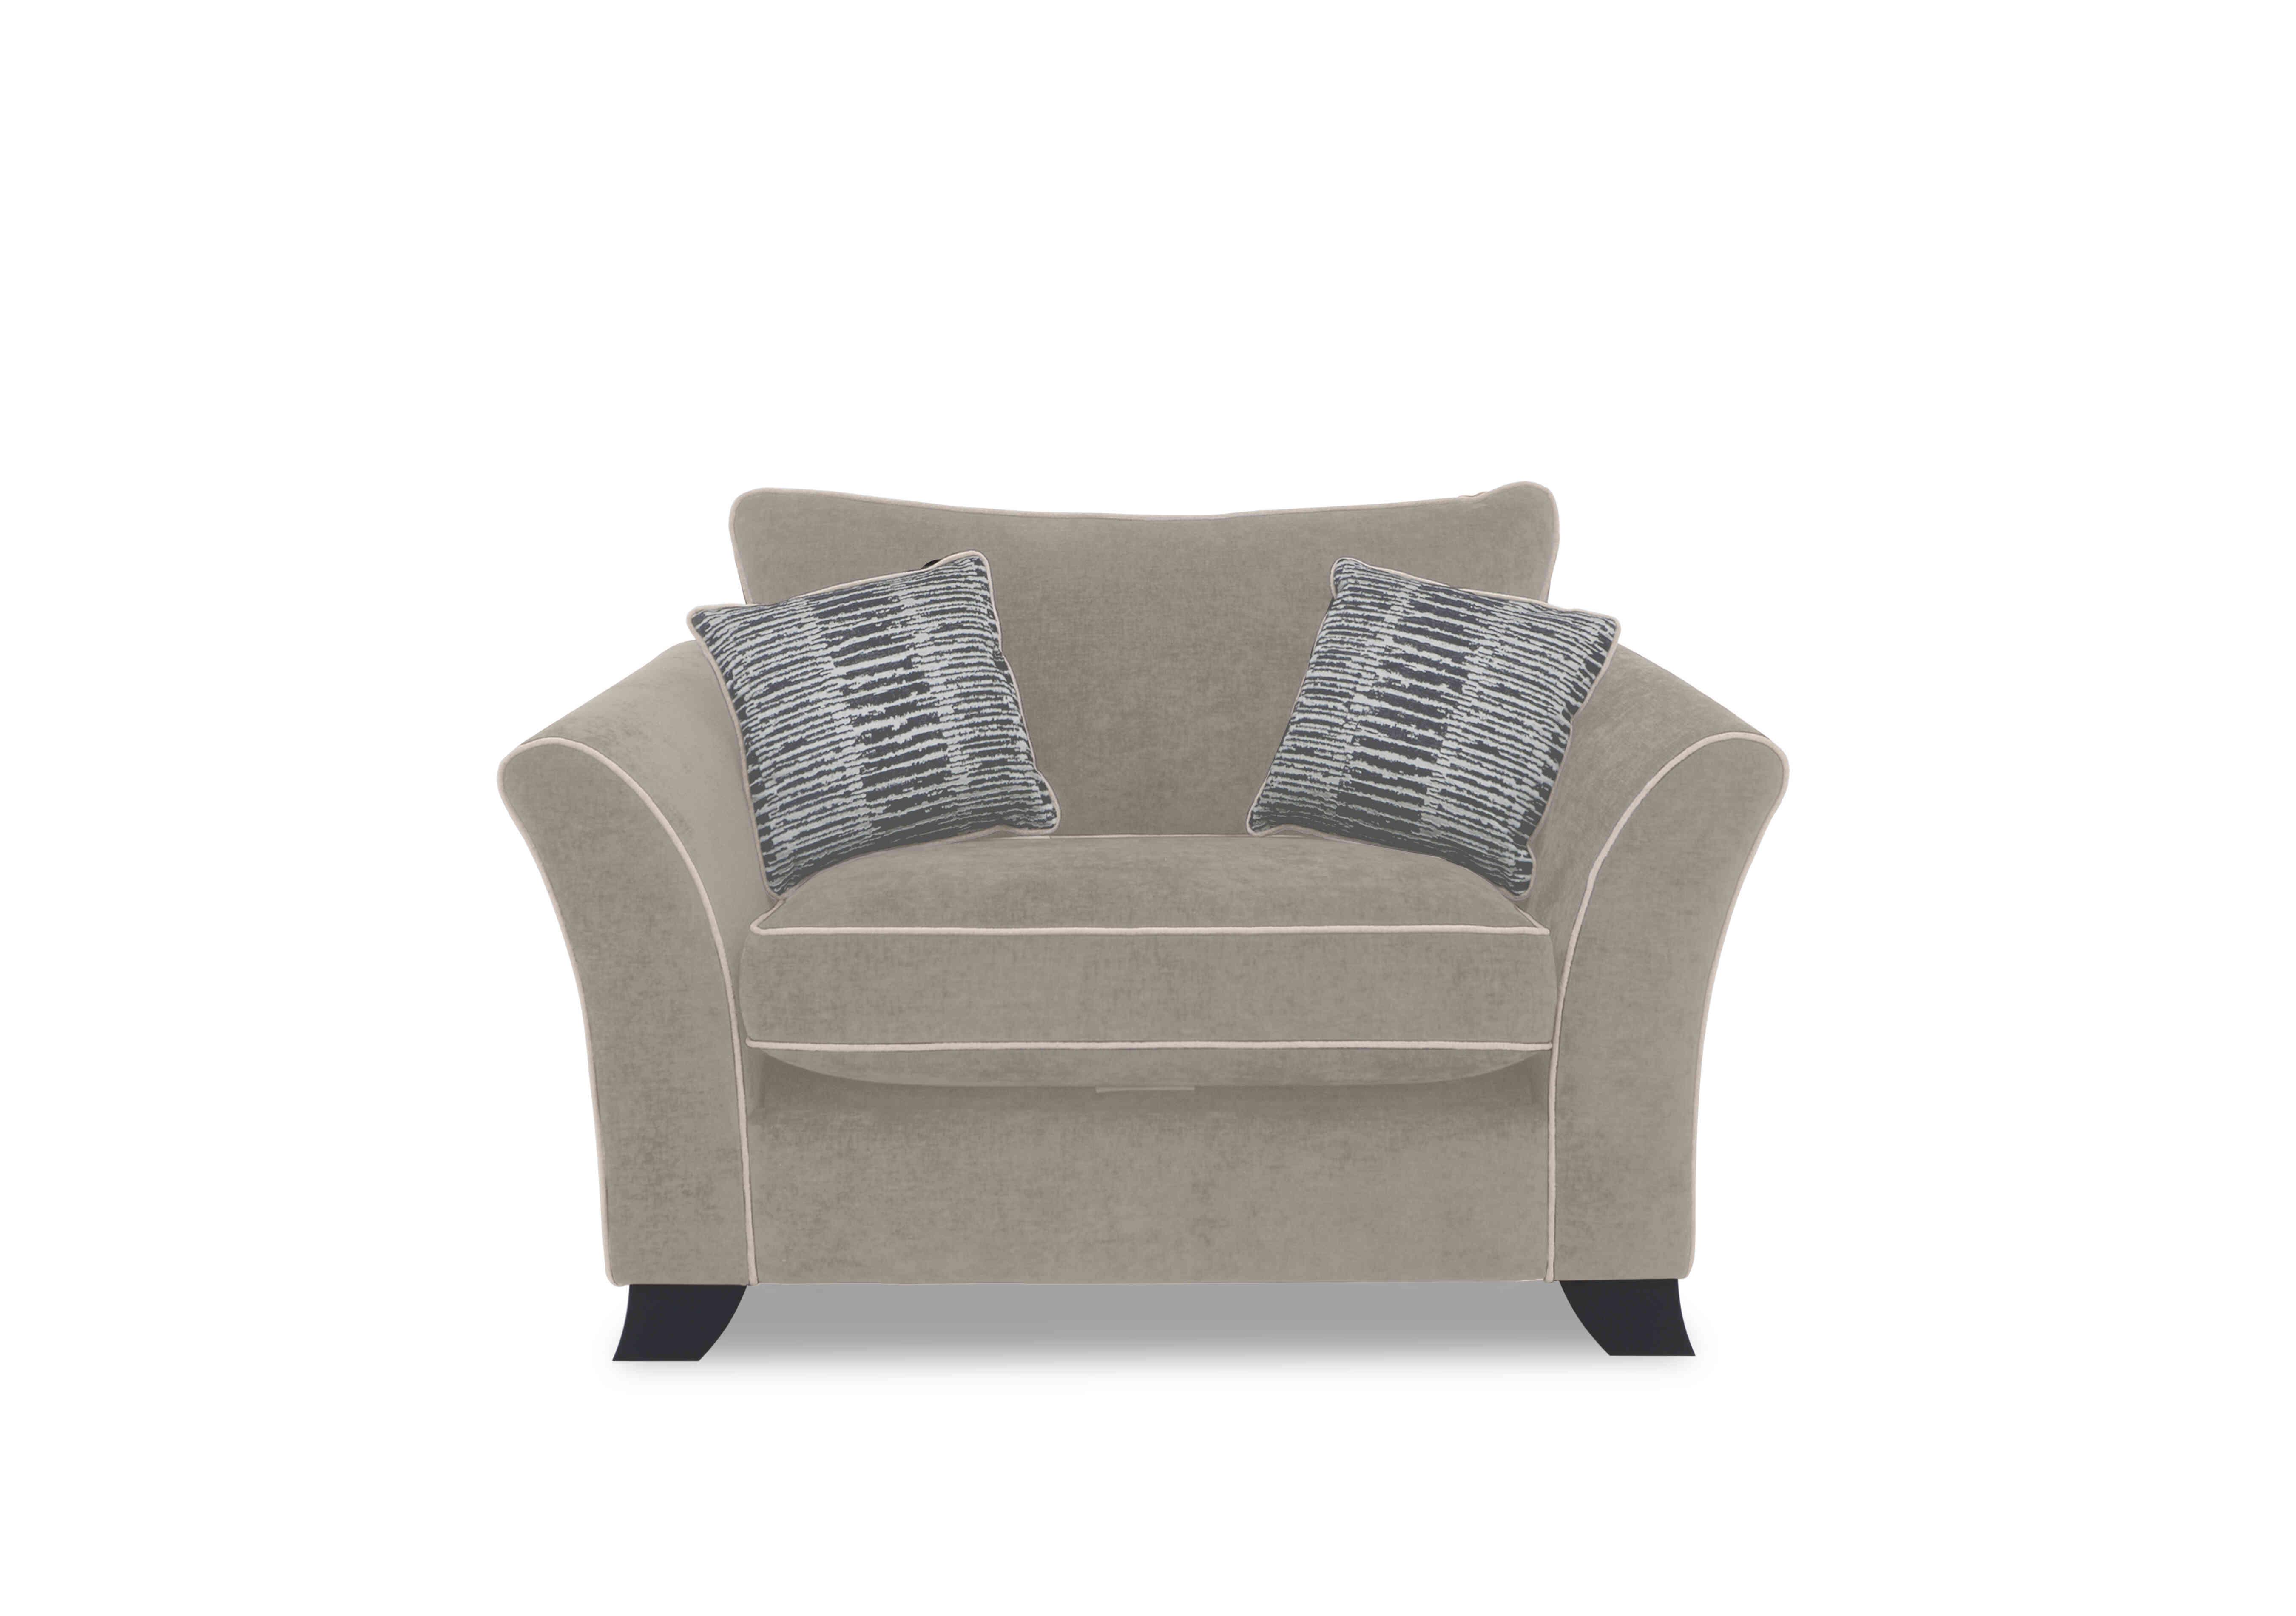 Stellar Classic Back Snuggler Sofa Bed in Bolero Quill Contrast on Furniture Village